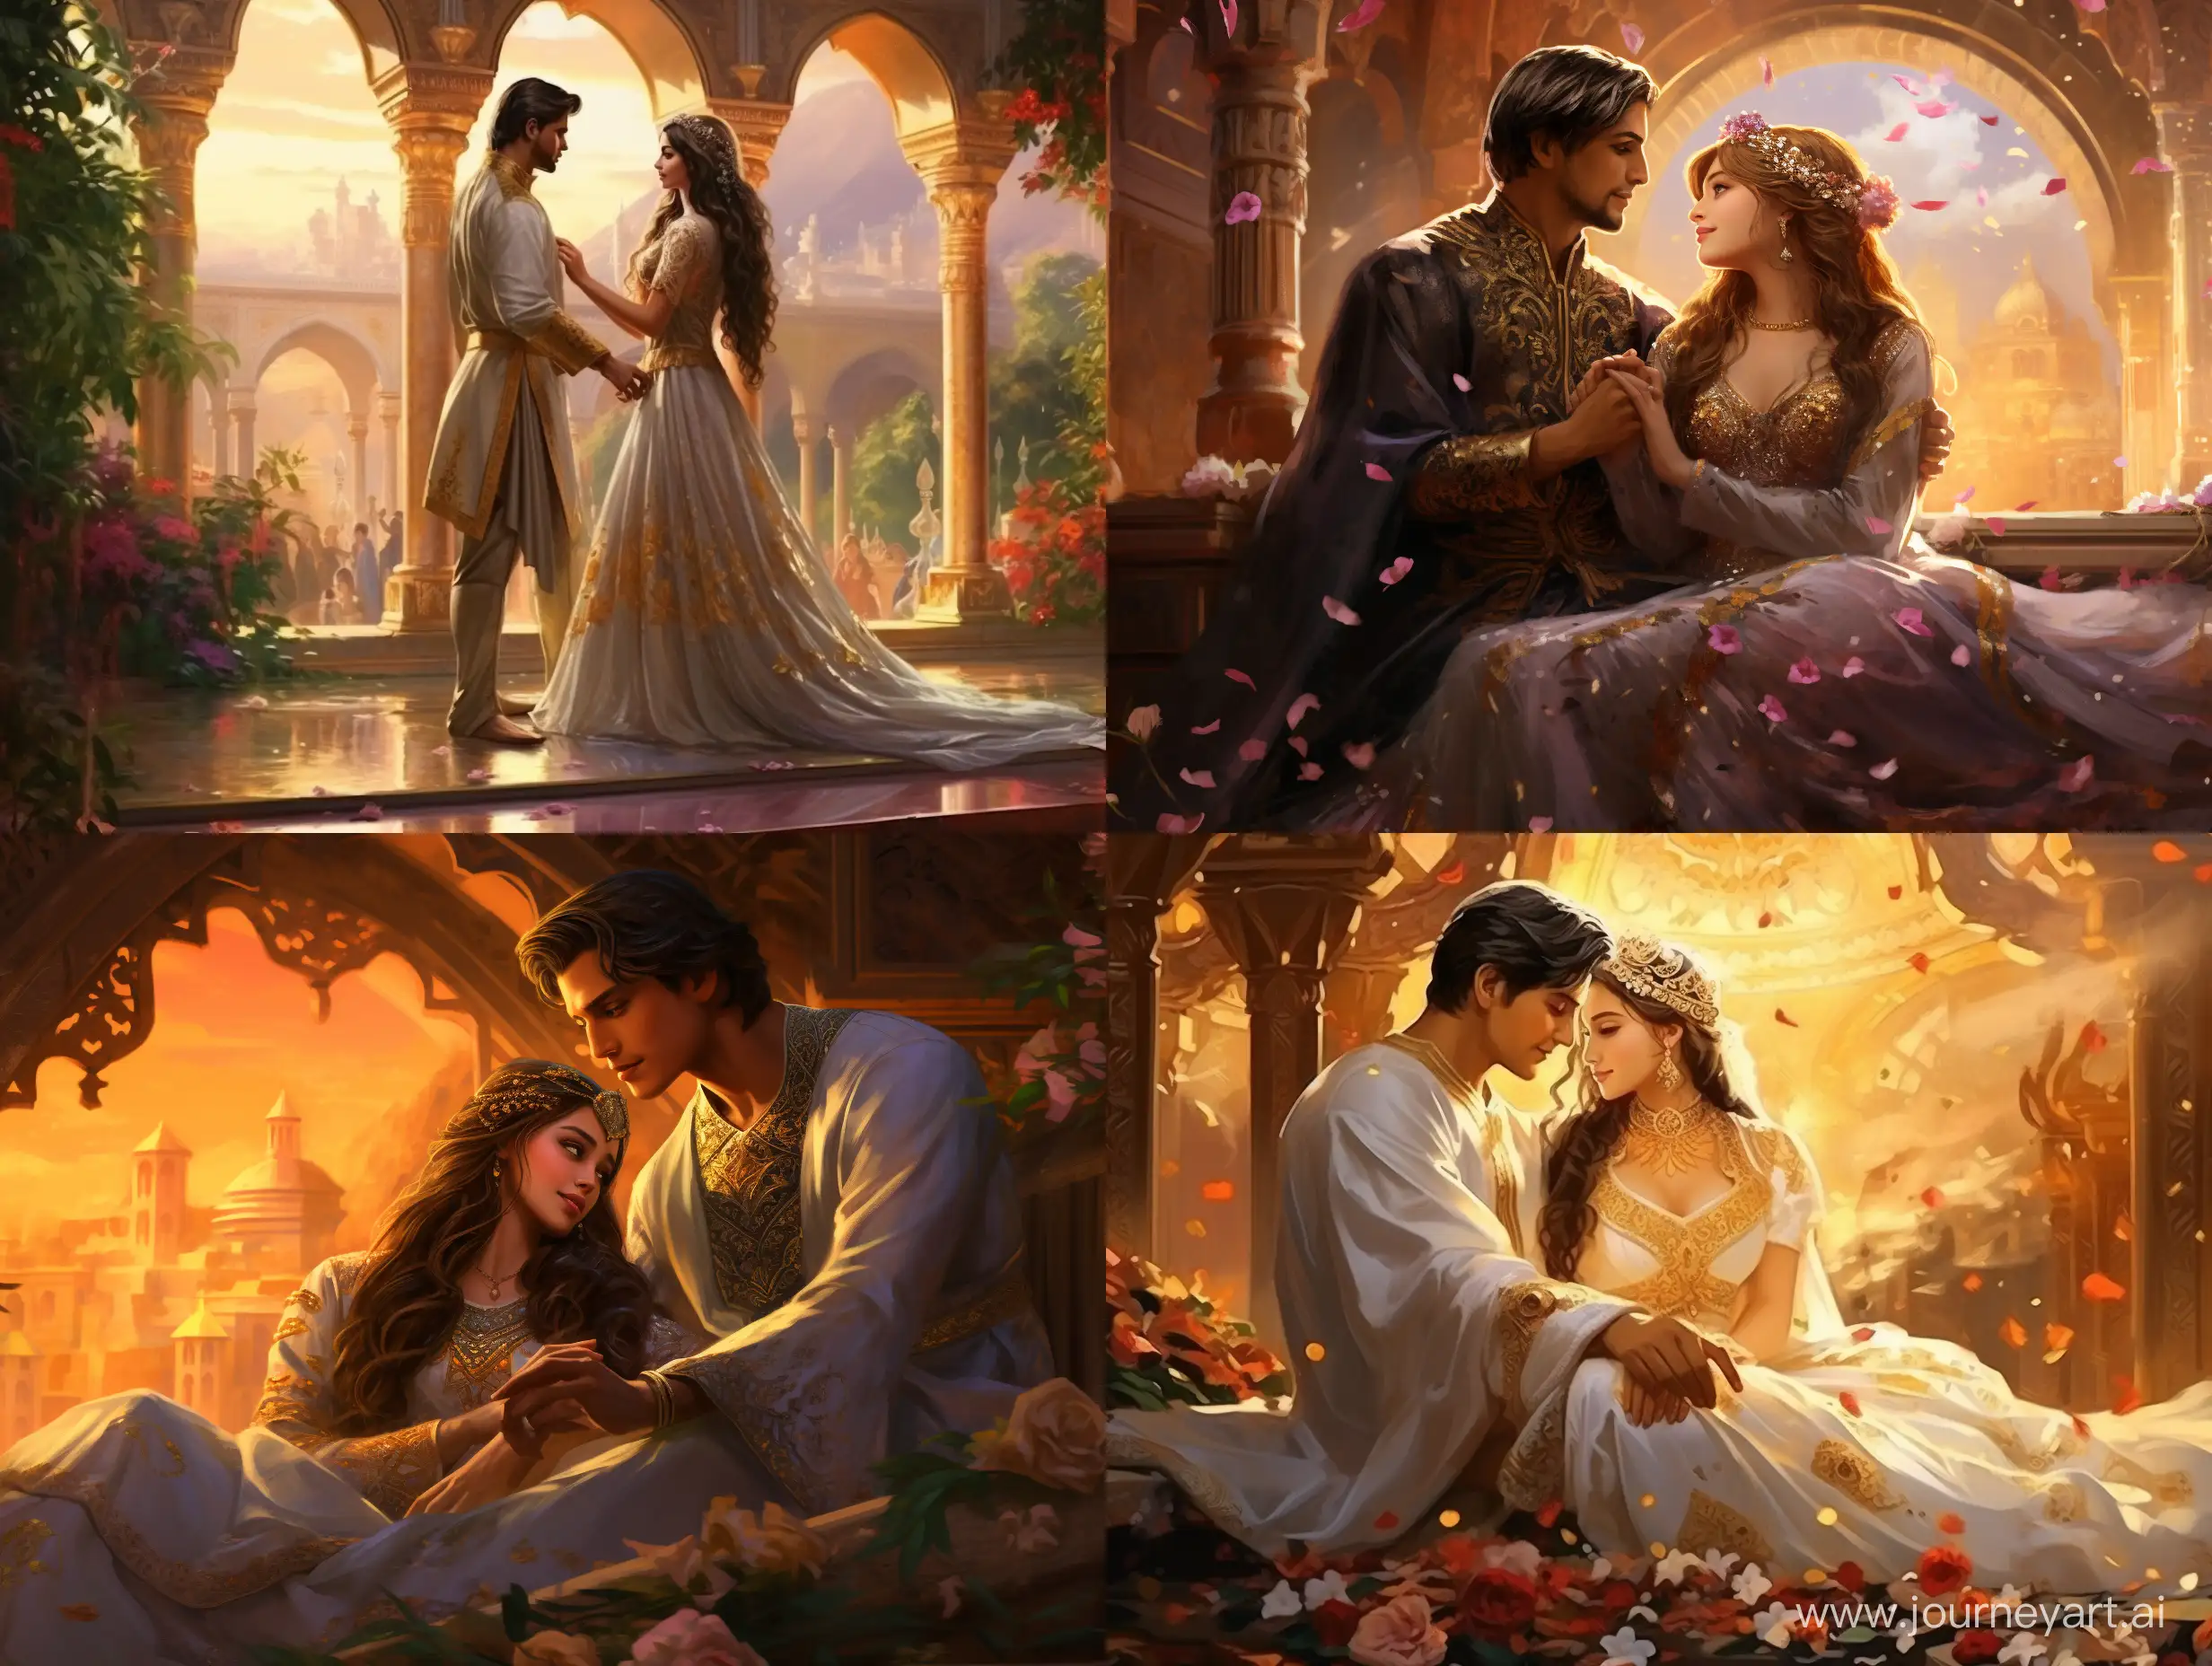 Illustration like a fairytale of the Arabian wedding of prince and princess in Arabian palace